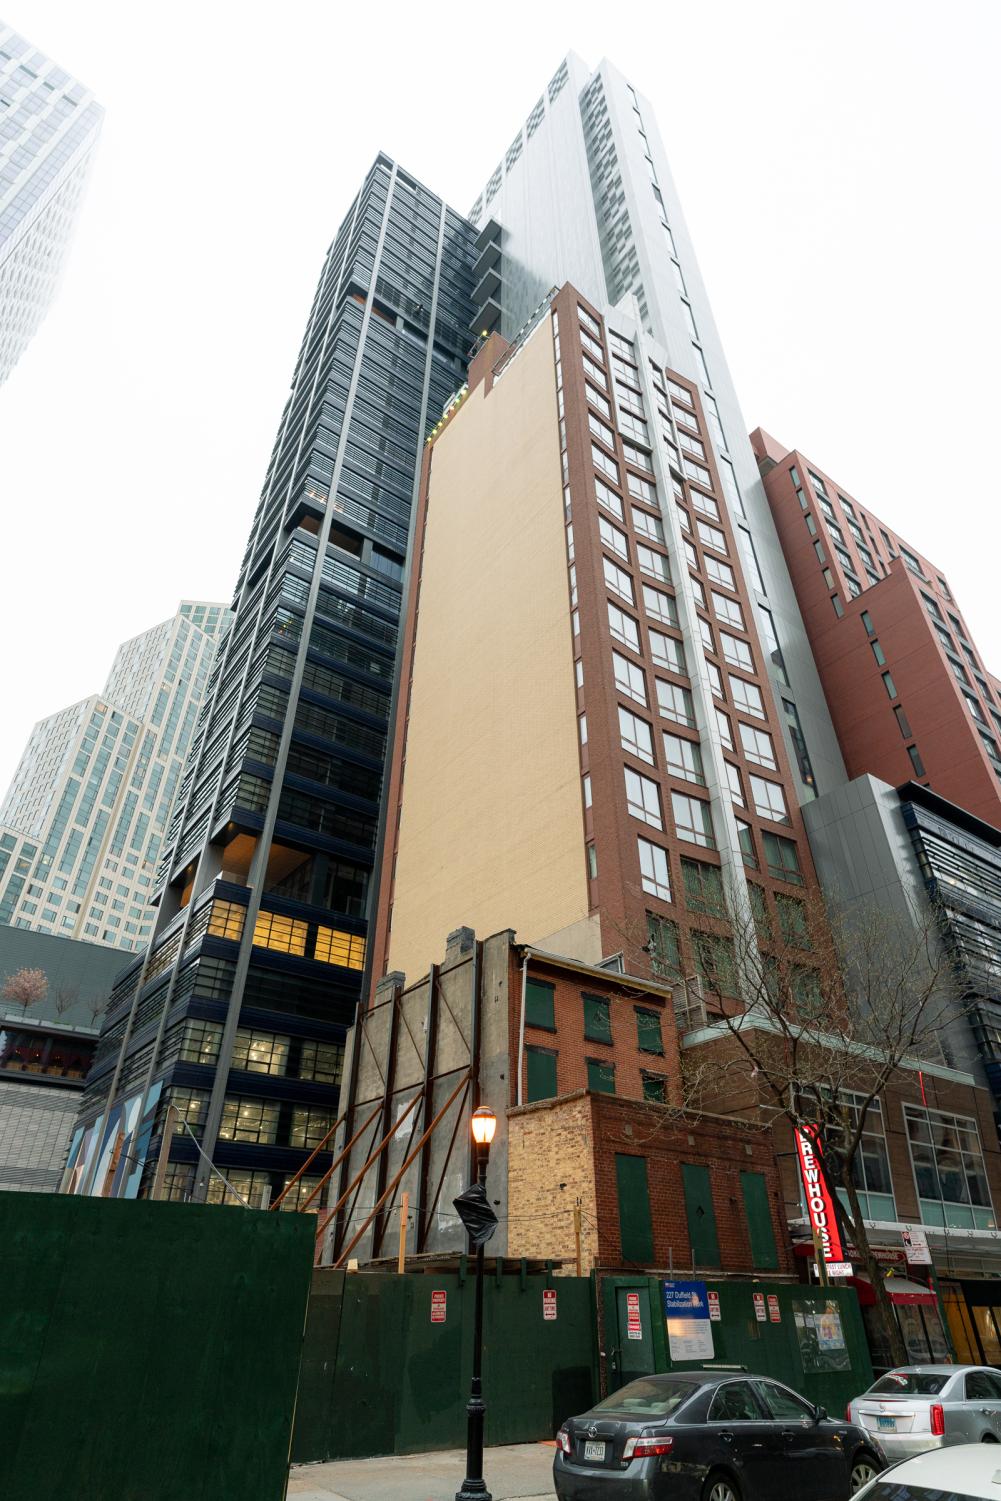 227 Duffield St. is seen beside towering modern apartment buildings.